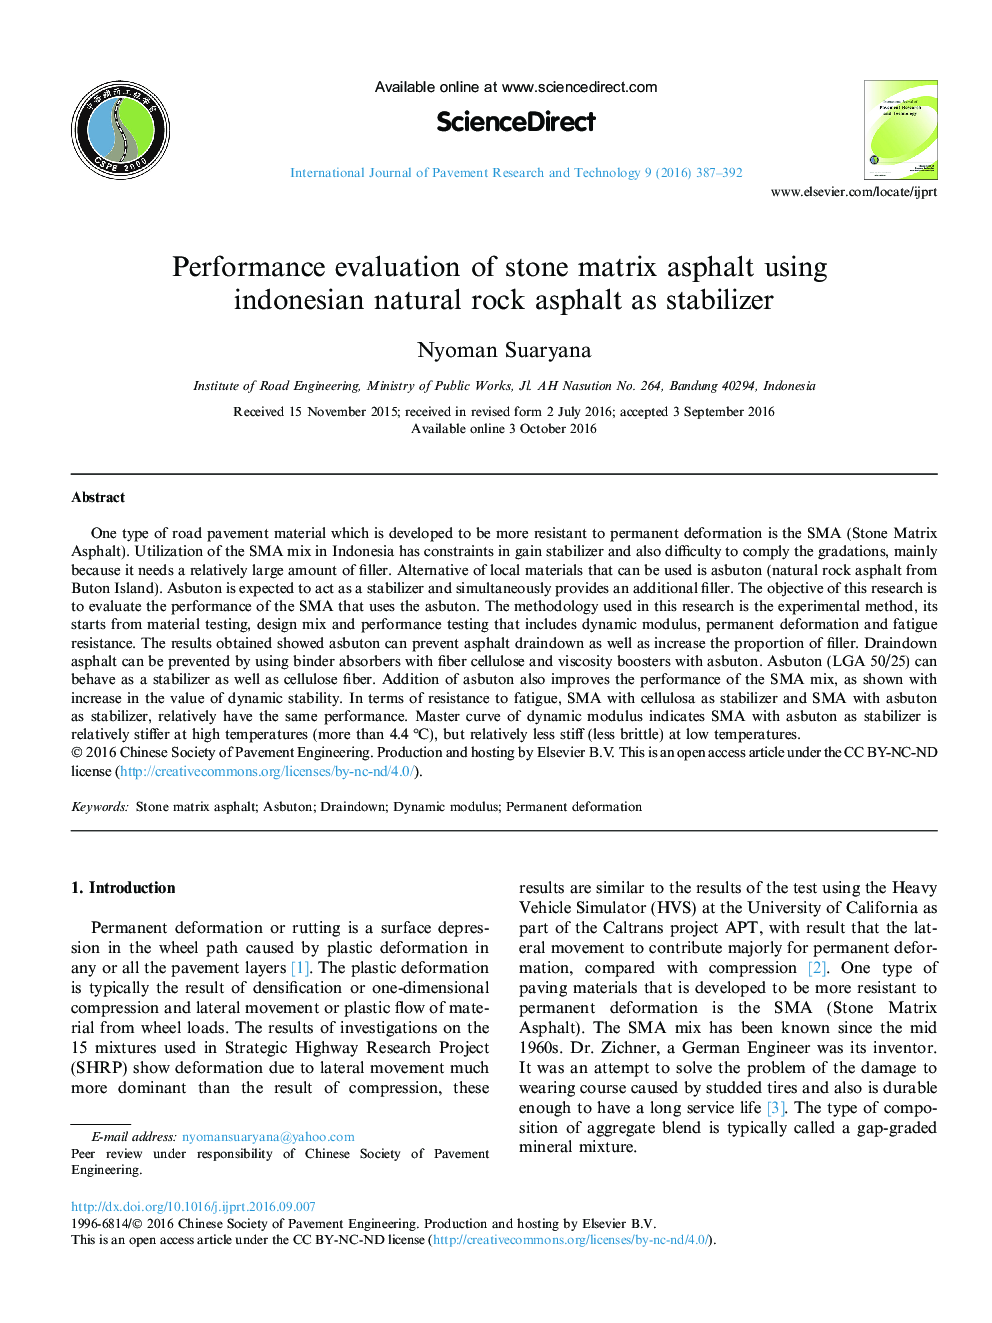 Performance evaluation of stone matrix asphalt using indonesian natural rock asphalt as stabilizer